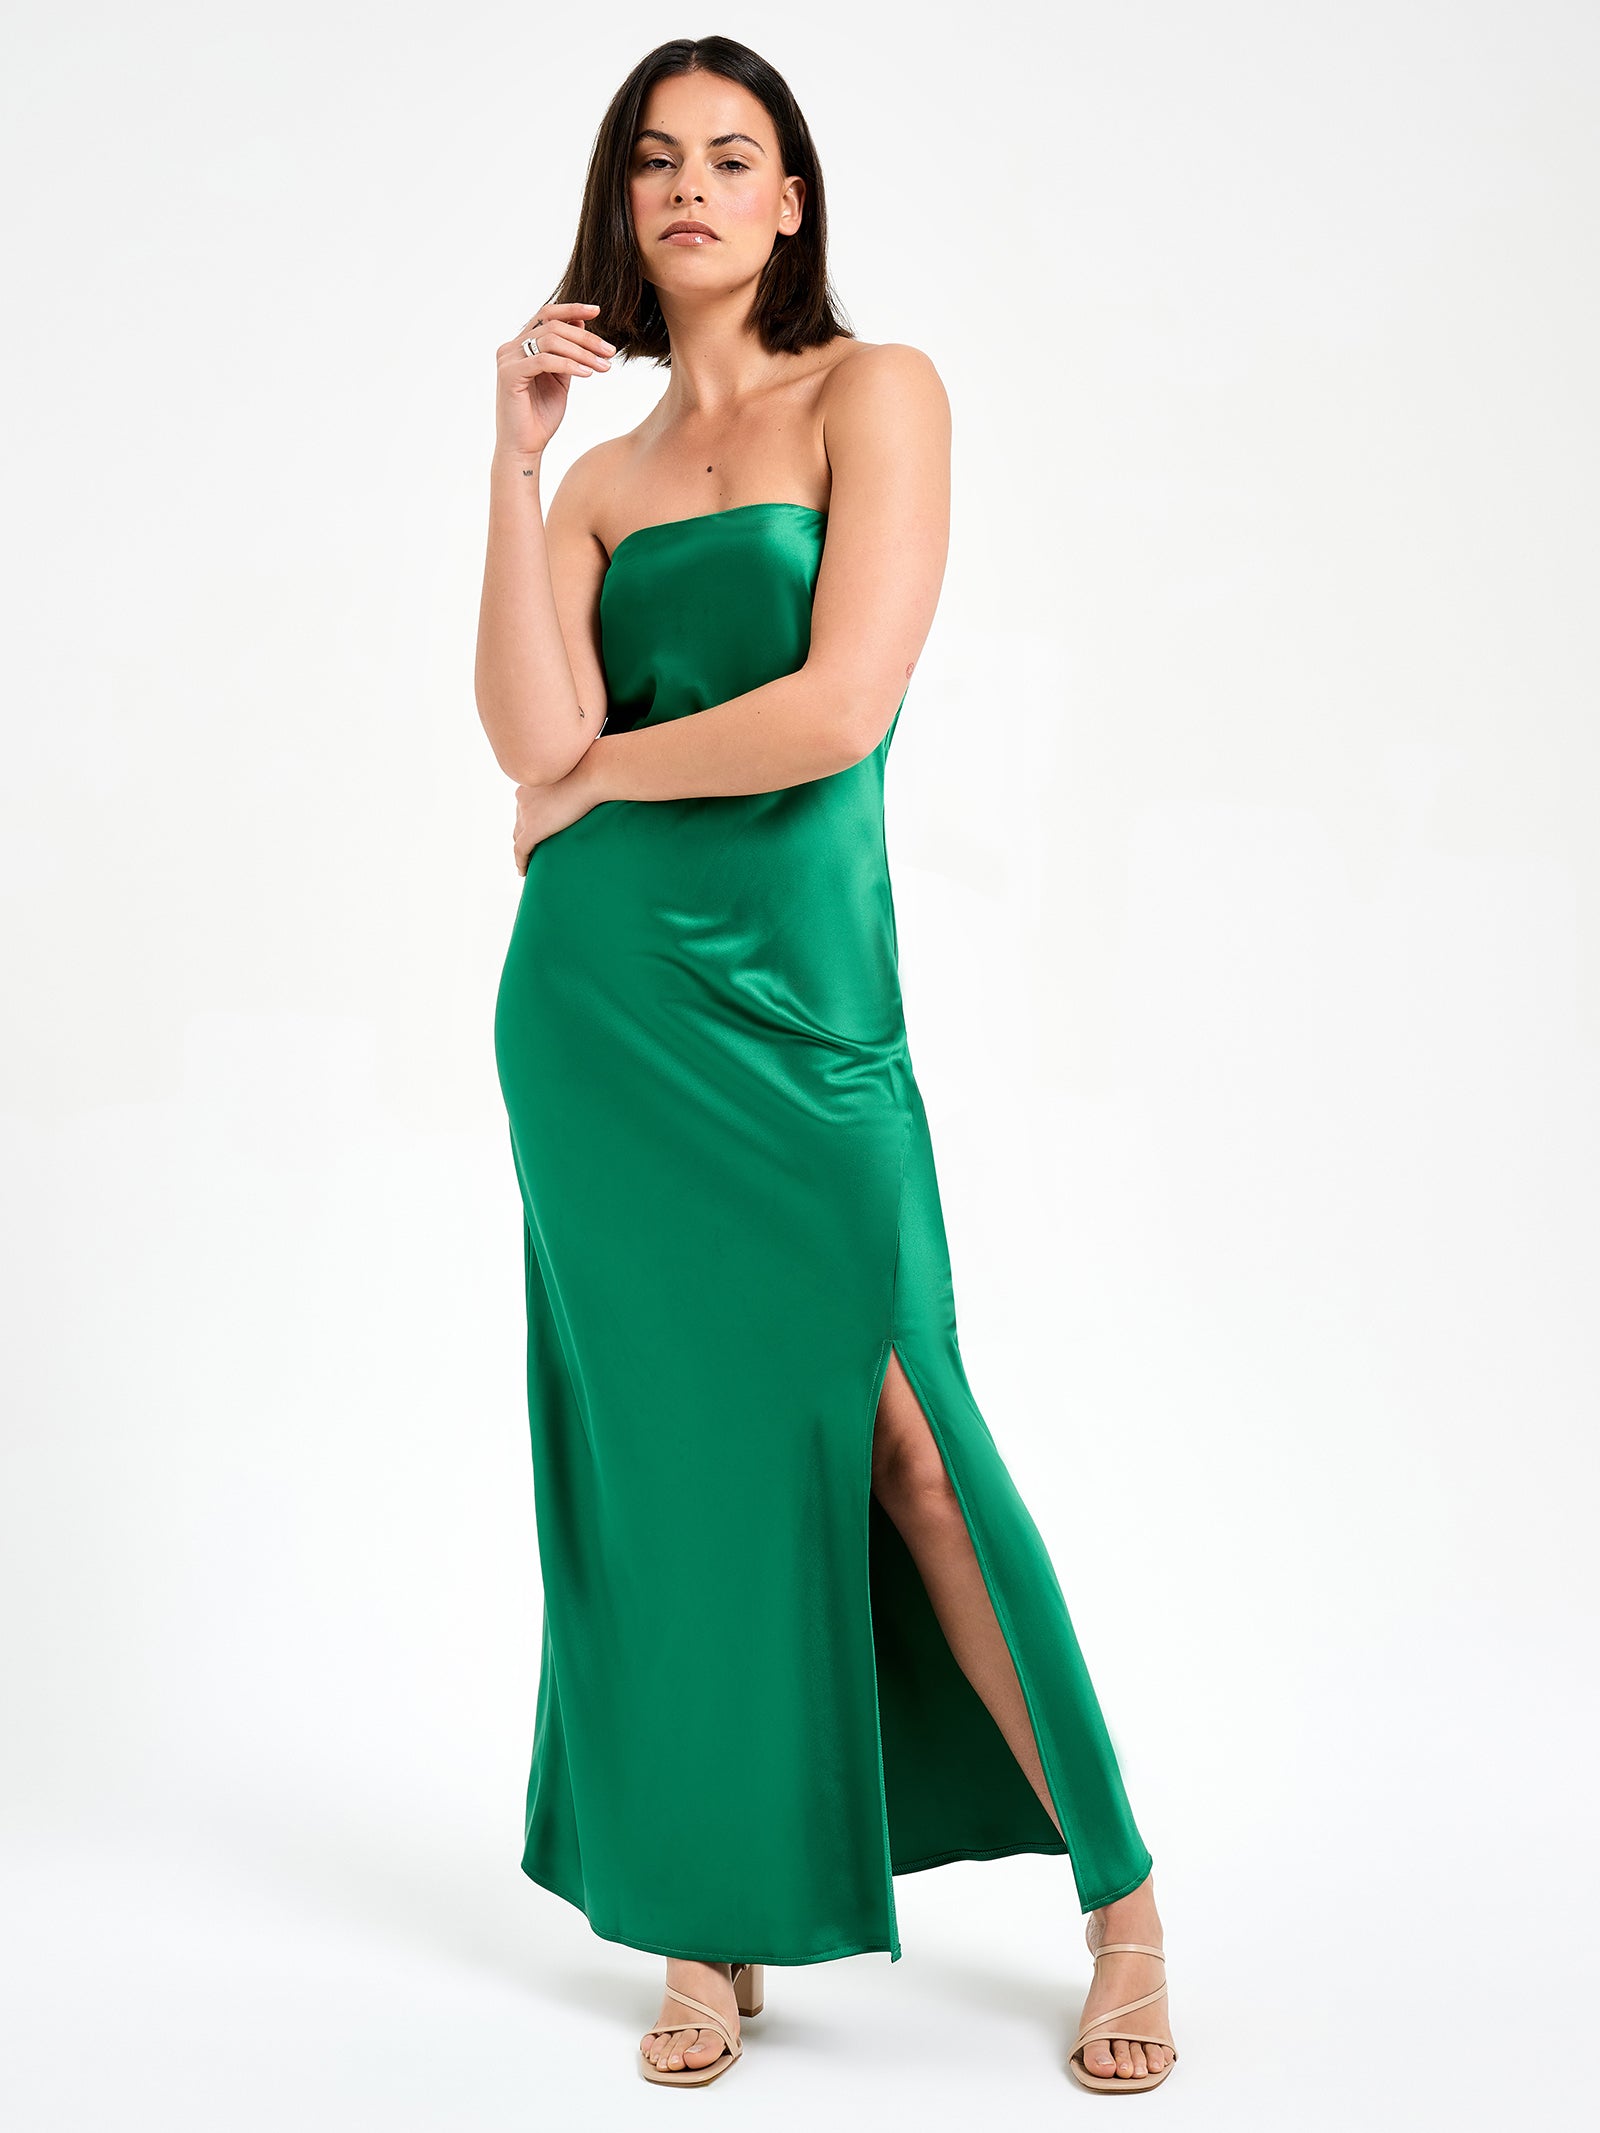 Celine Strapless Maxi Dress in Emerald